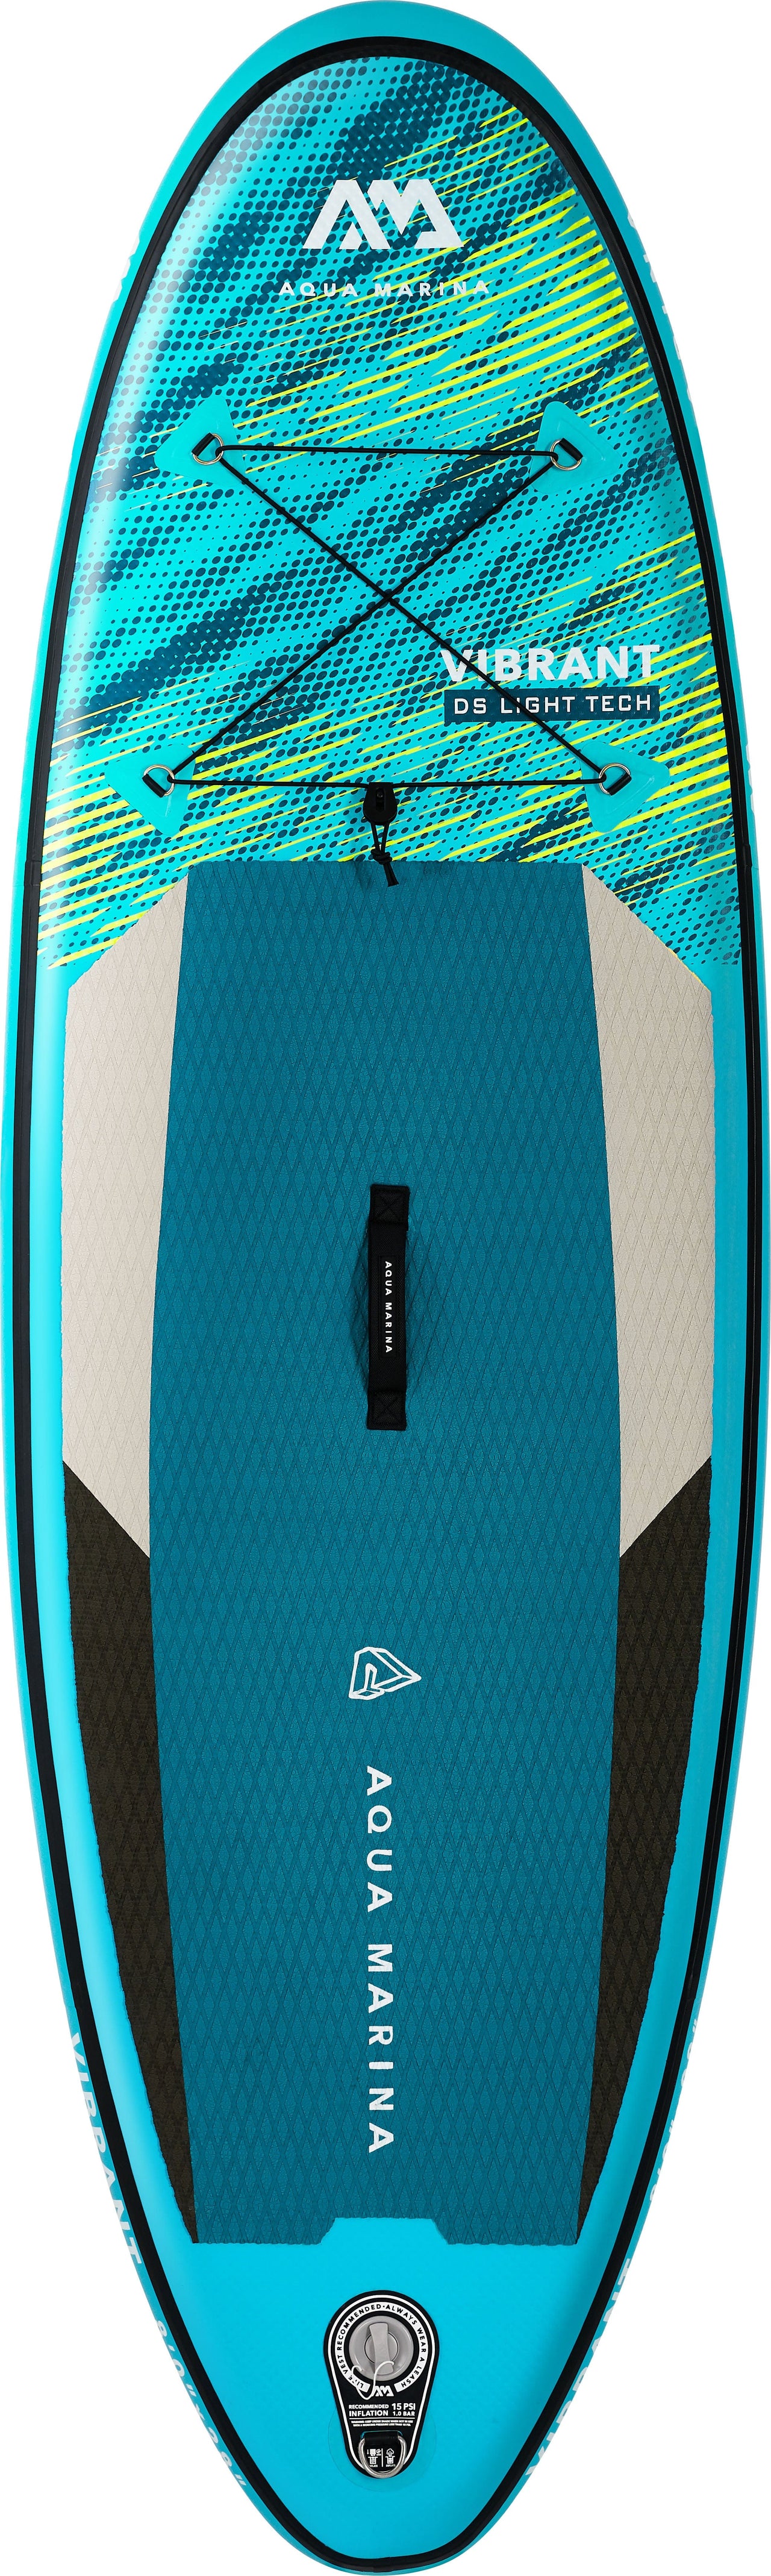 Aqua Marina 8’0″ VIBRANT Youth 2022 Kids Inflatable Paddle Board SUP - Good Wave